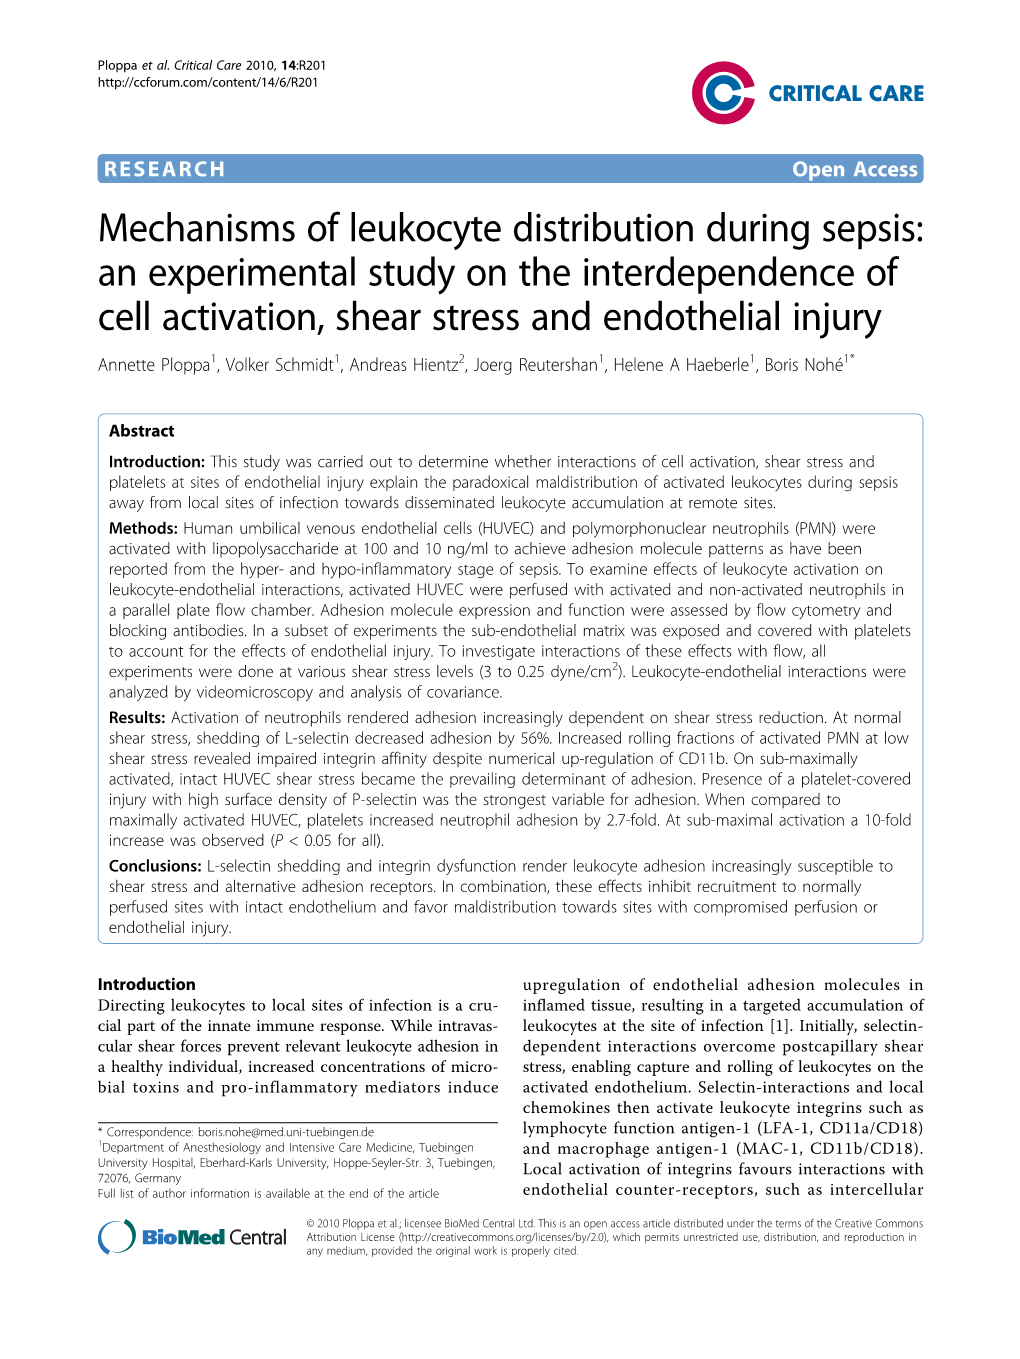 Mechanisms of Leukocyte Distribution During Sepsis